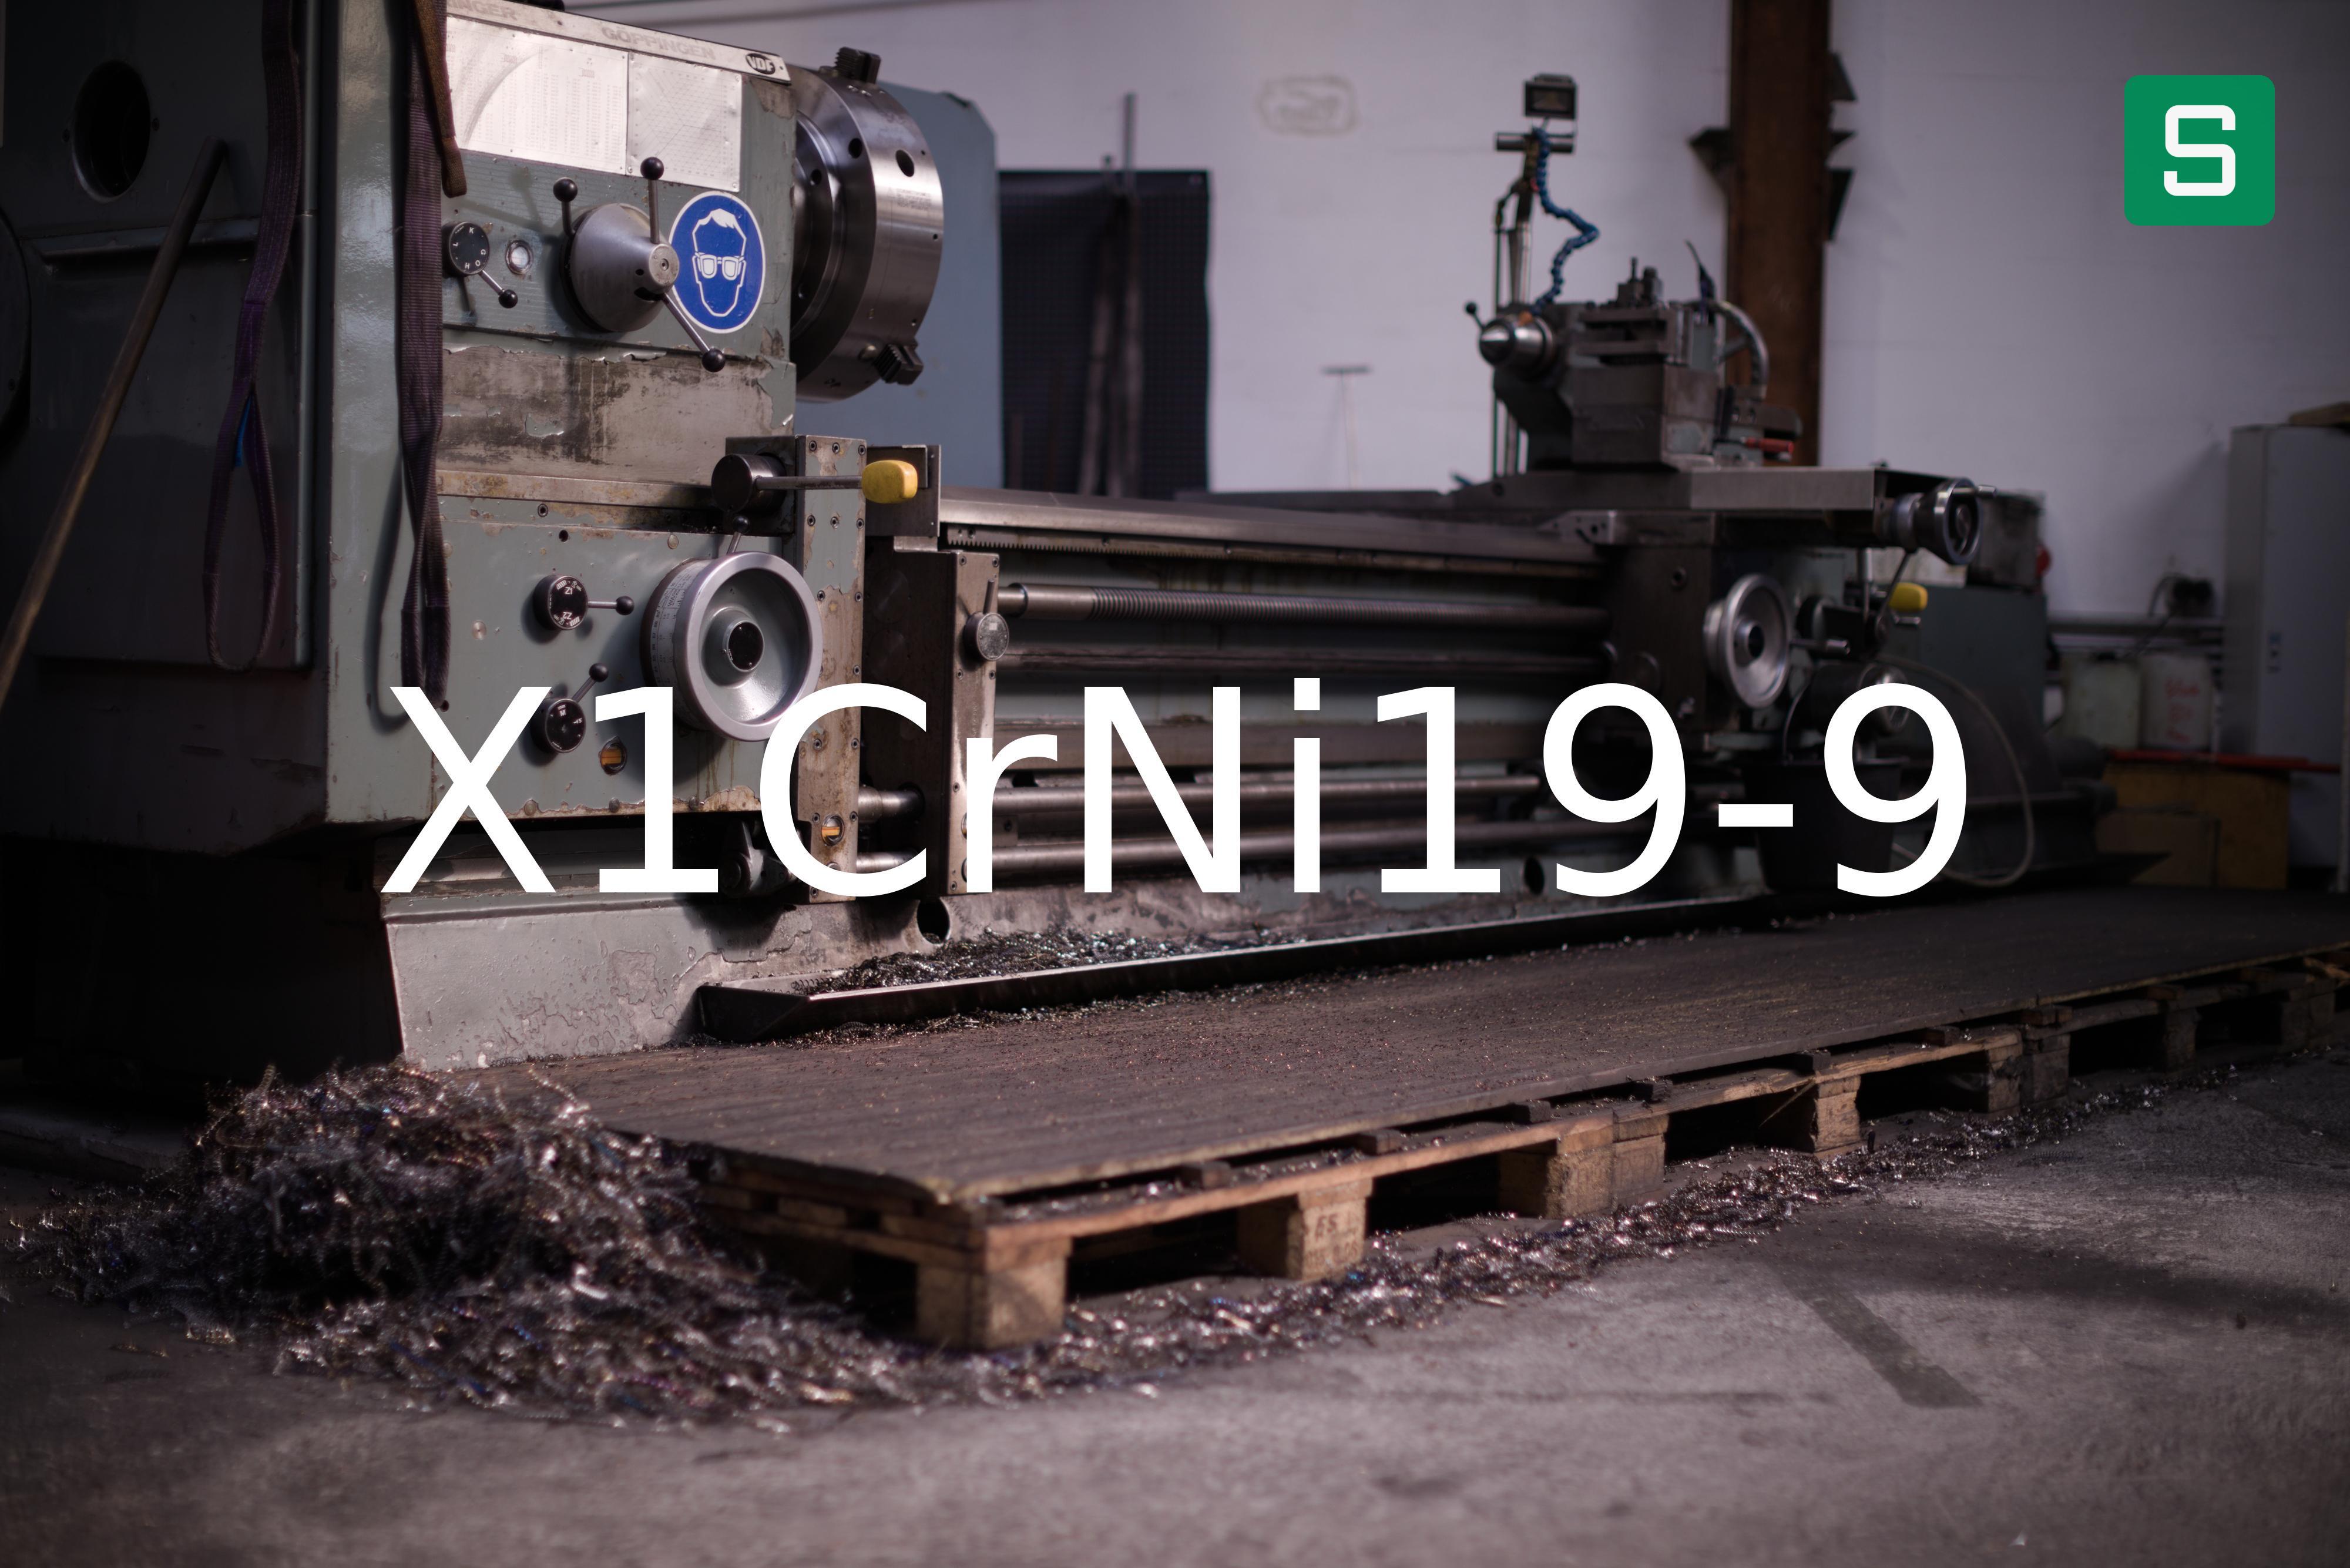 Steel Material: X1CrNi19-9